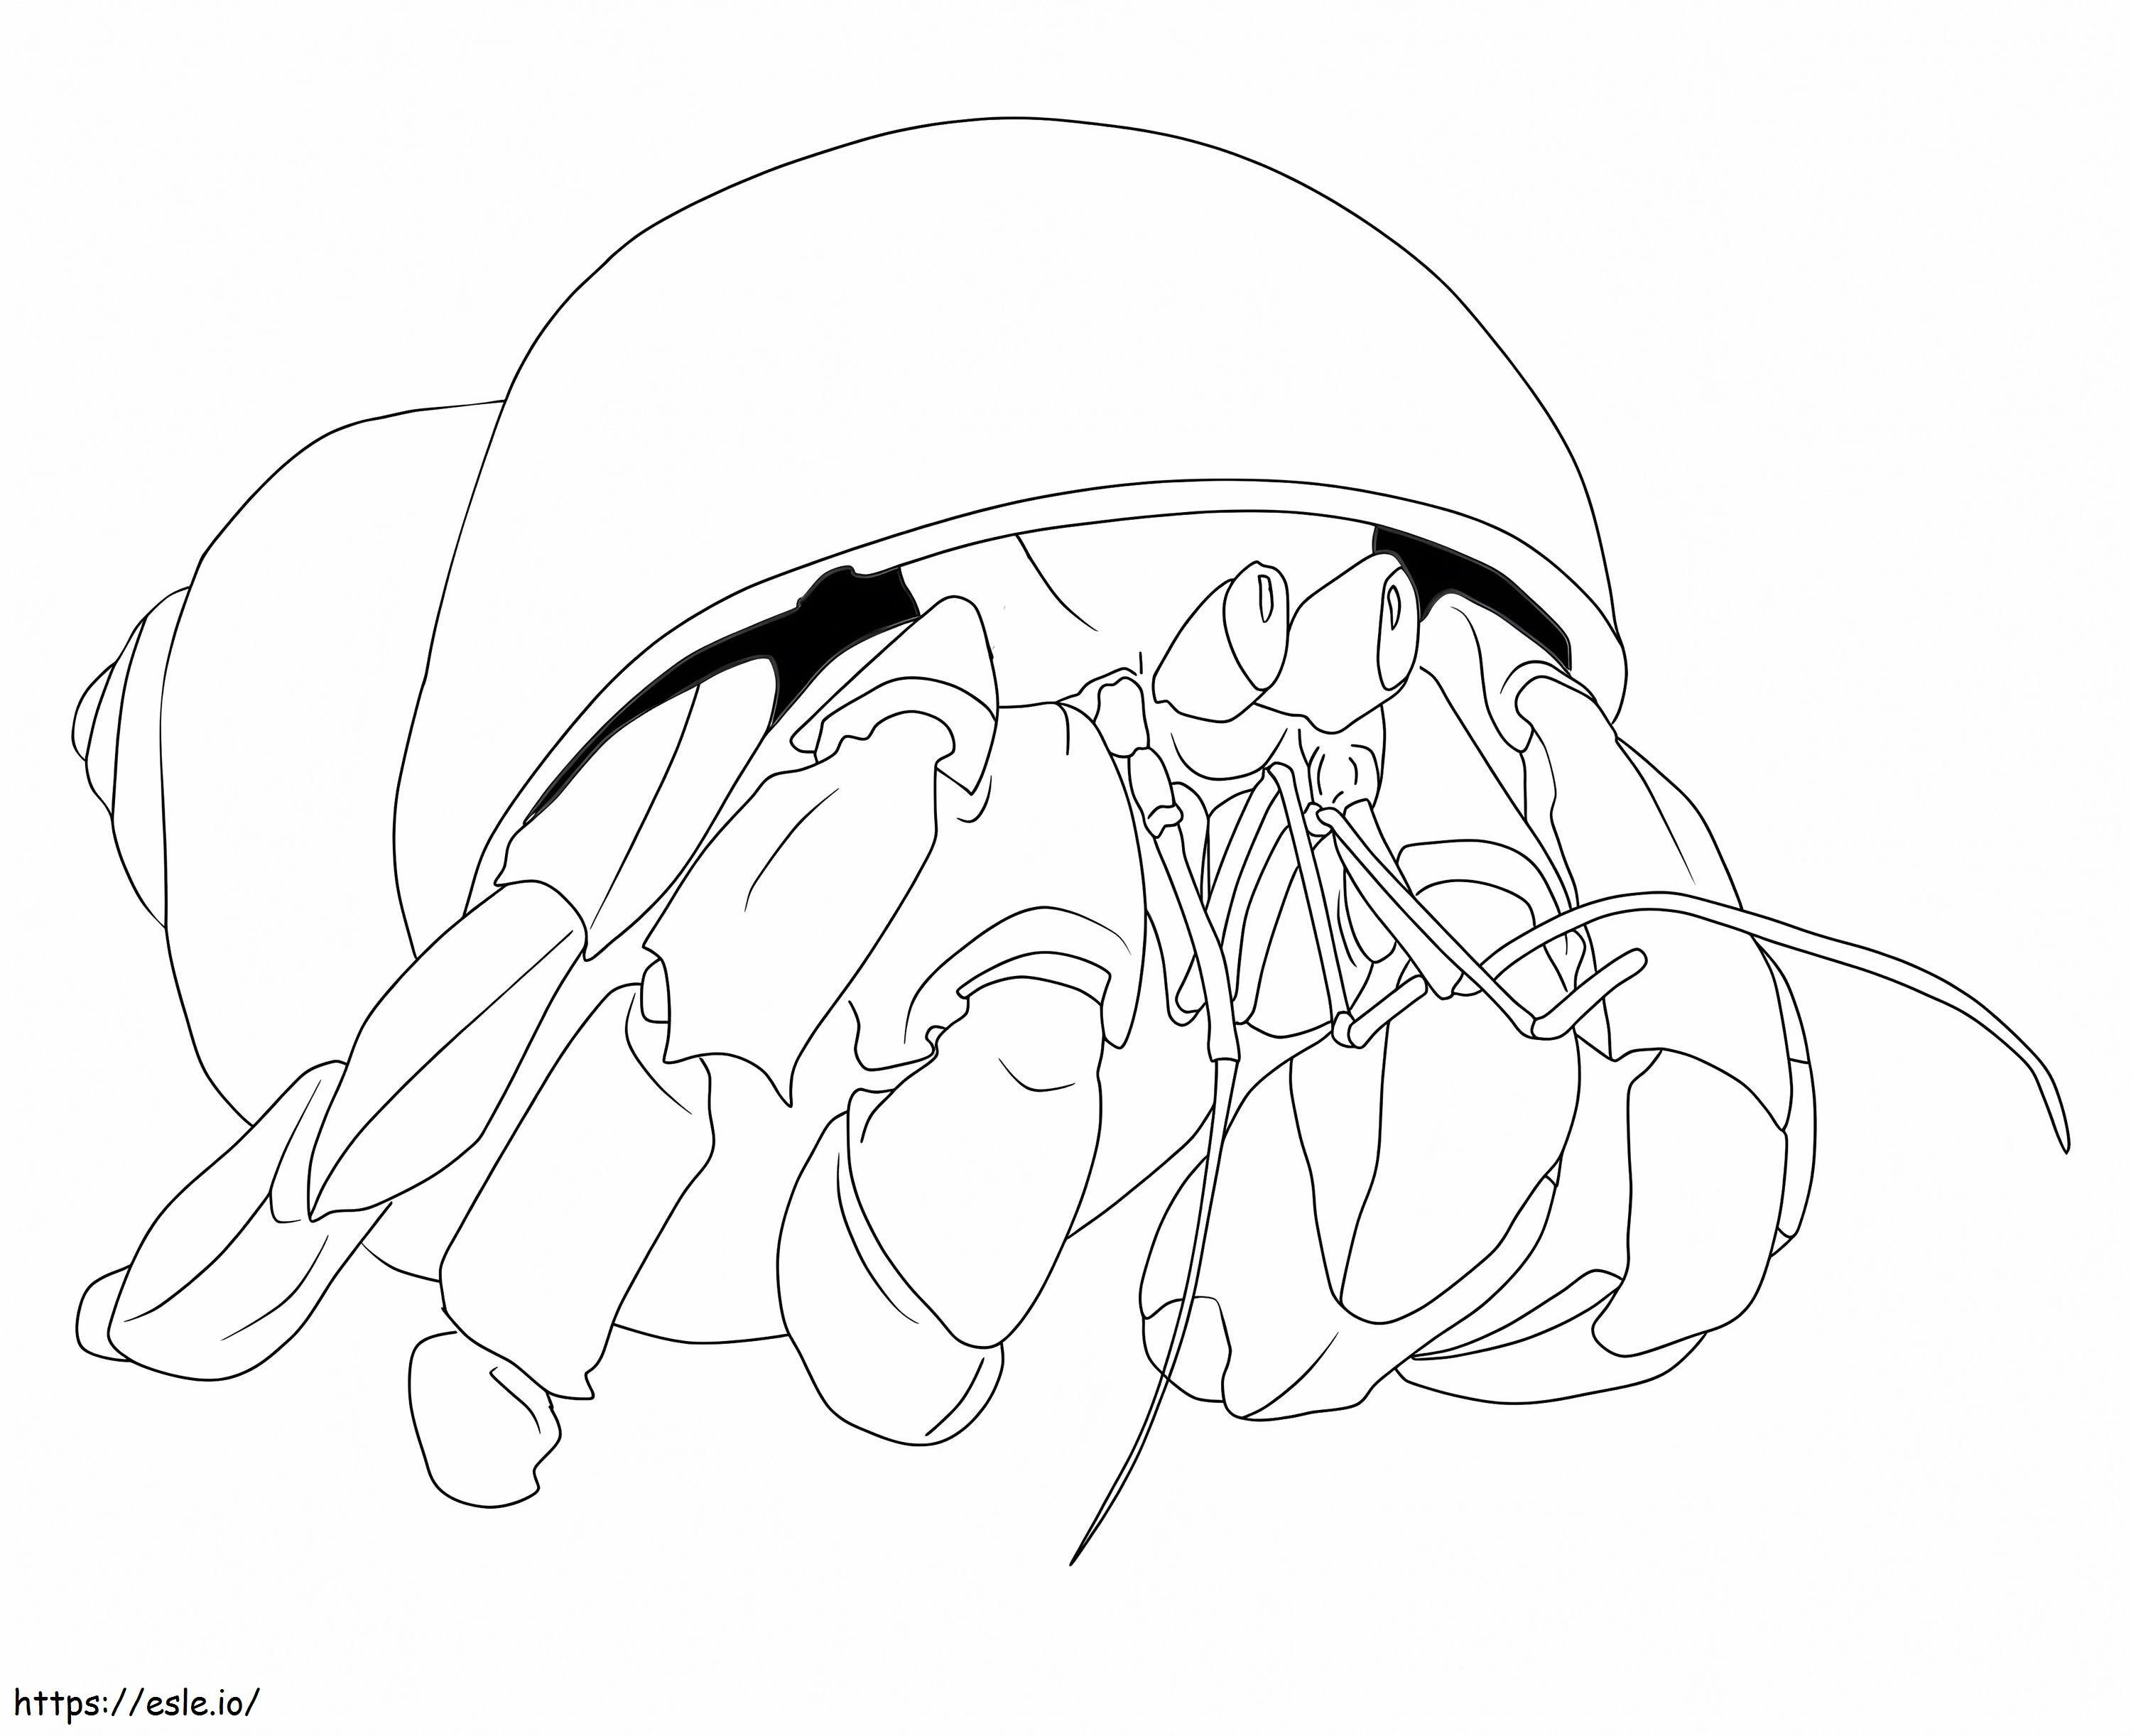 Hermit Crab 1 coloring page